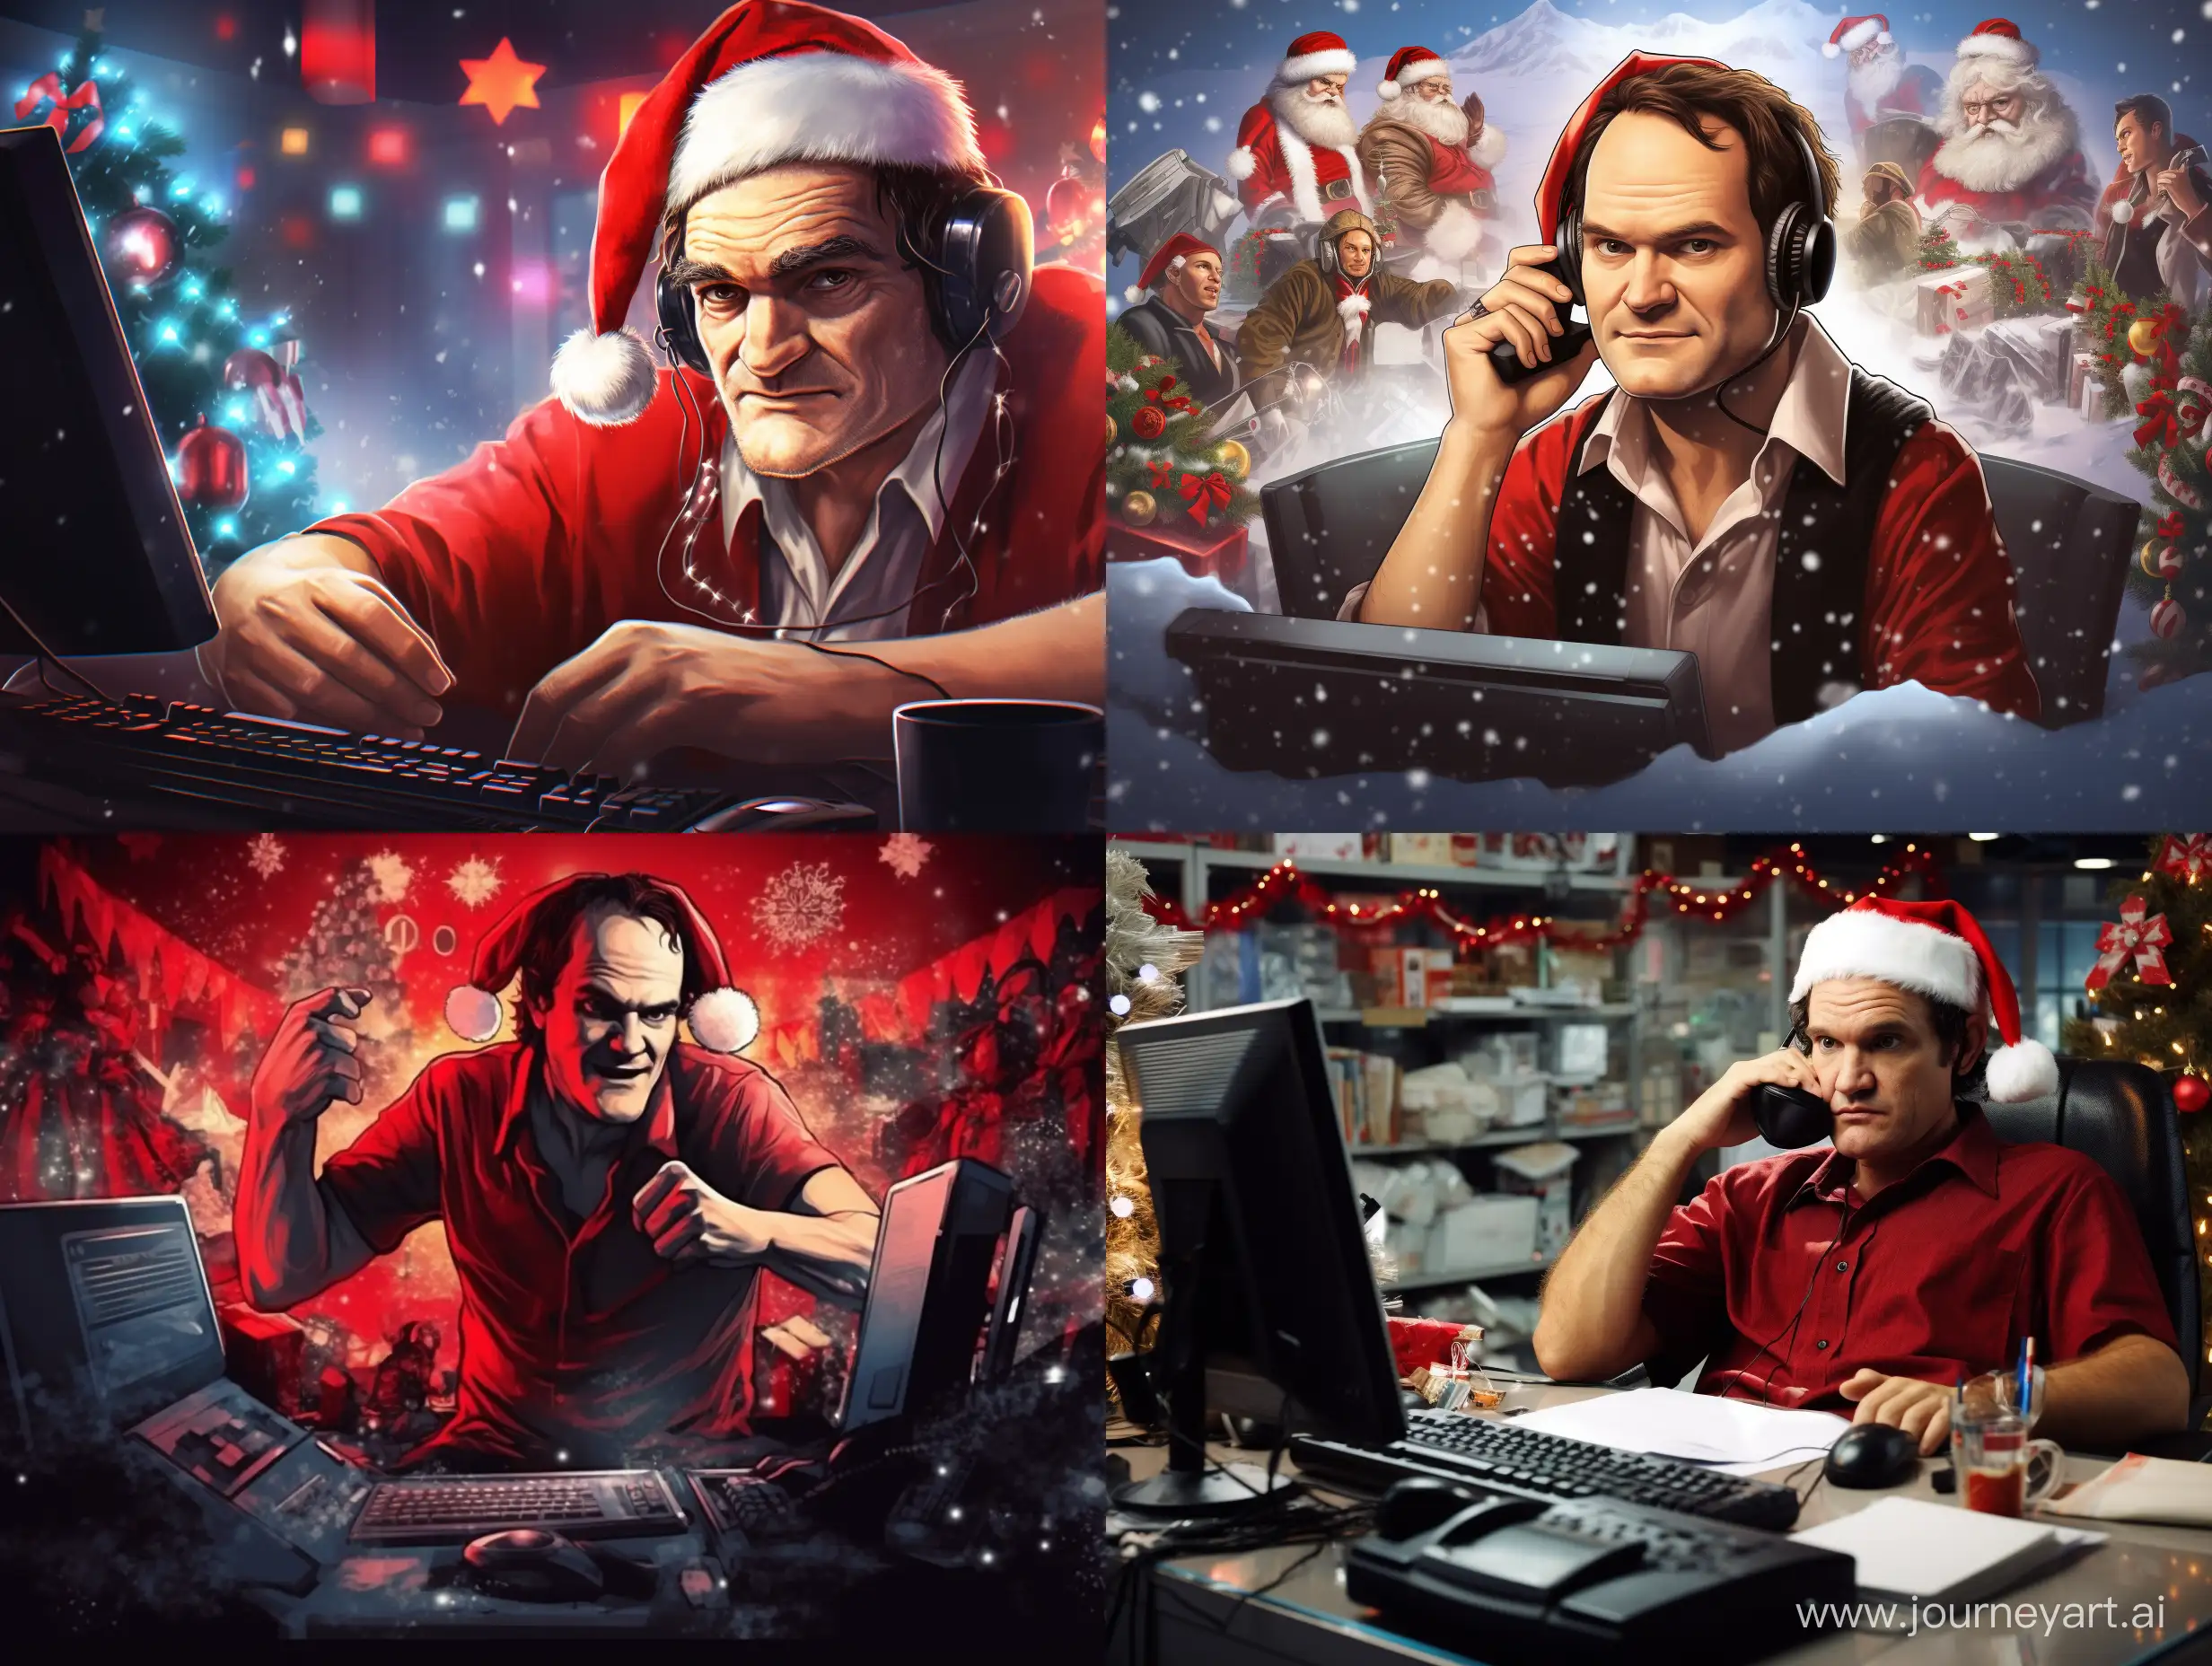 Merry Christmas Quentin Tarantino work on Call Center